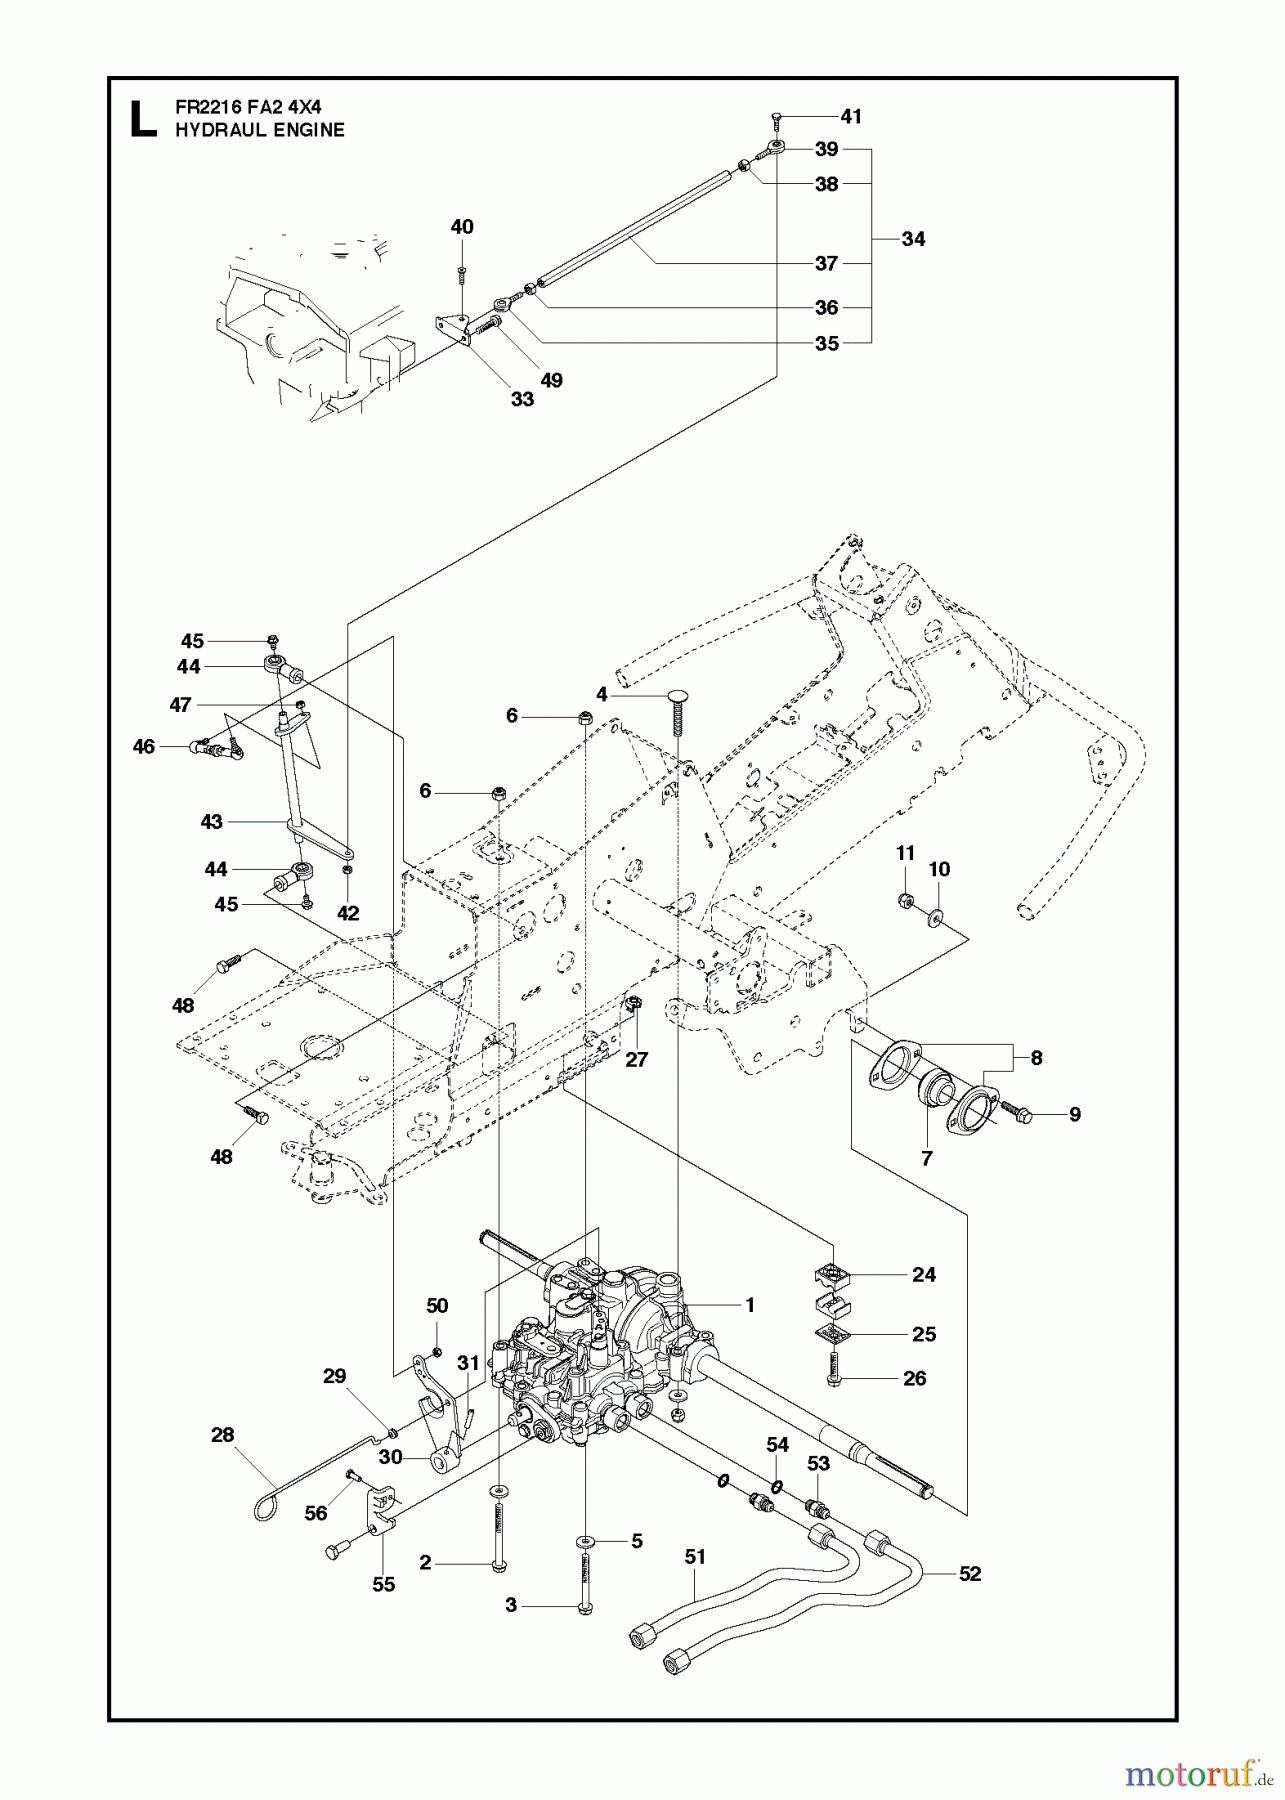  Jonsered Reitermäher FR2216 FA2 4x4 (966773901) - Jonsered Rear-Engine Riding Mower (2012) HYDRAULIC PUMP- MOTOR